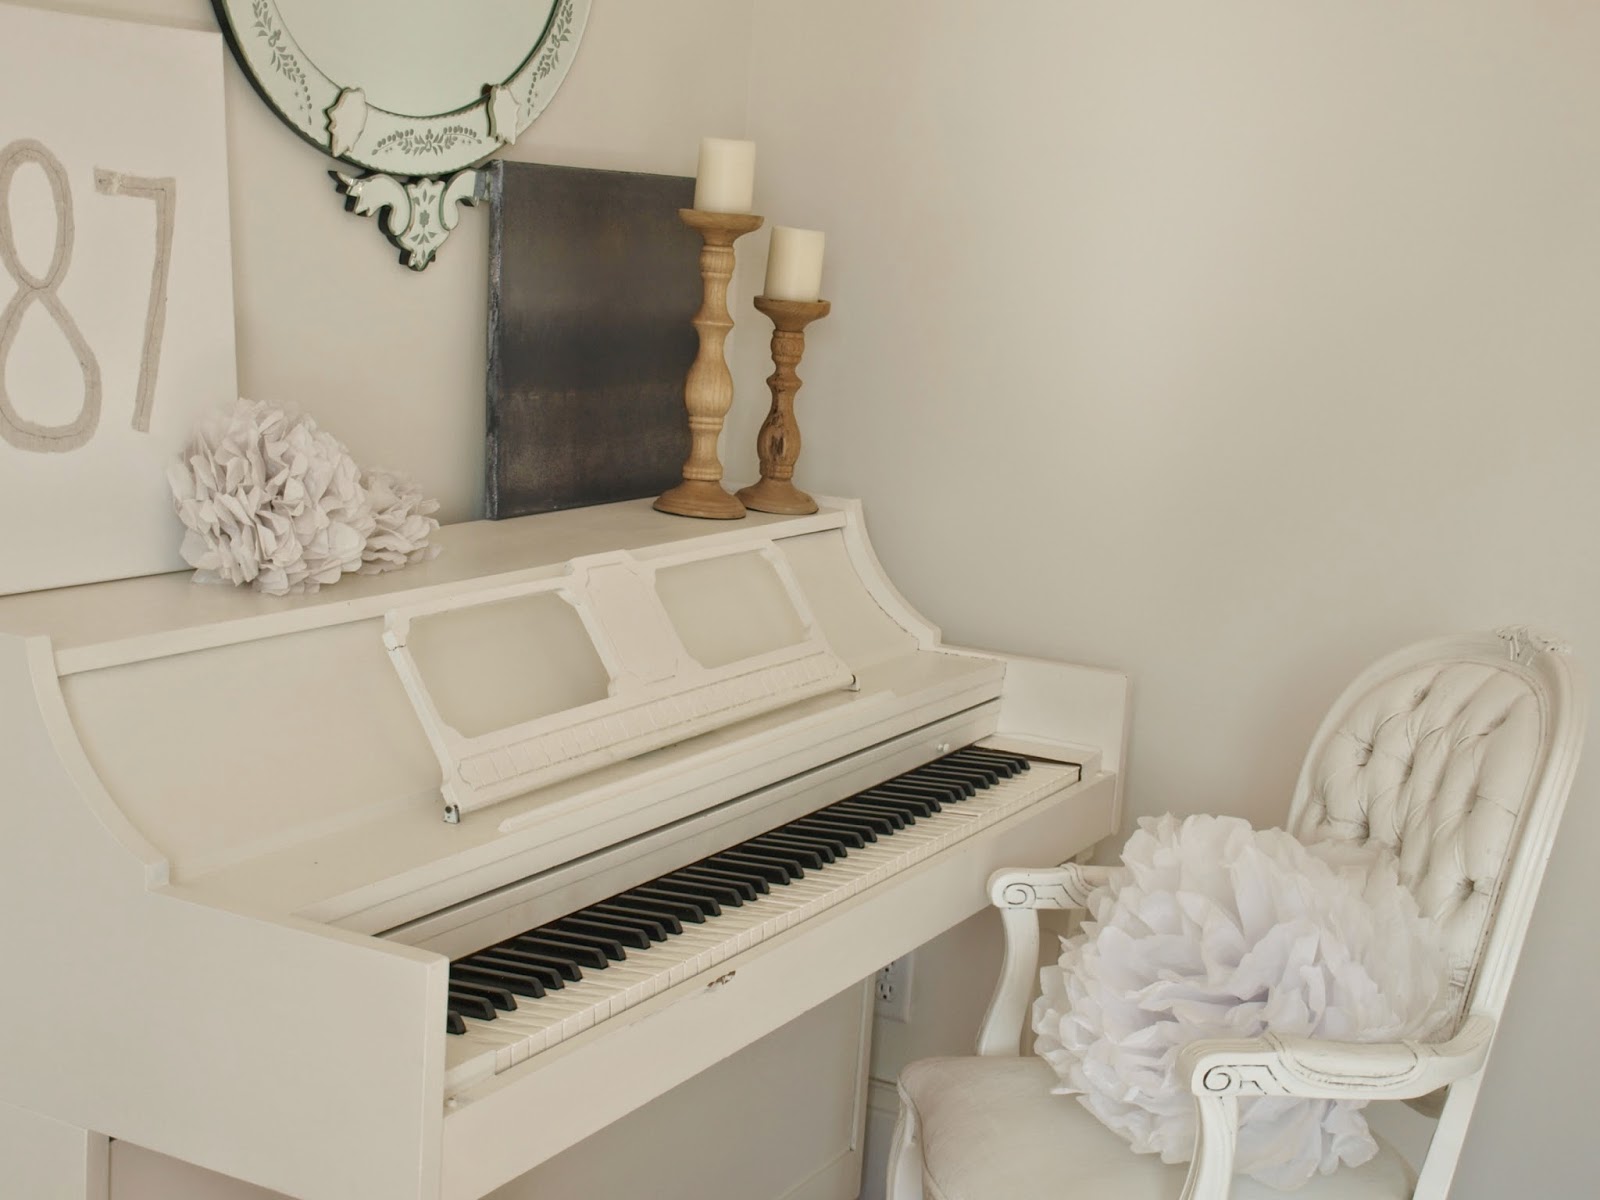 My Home June 2014: Simple White Studio